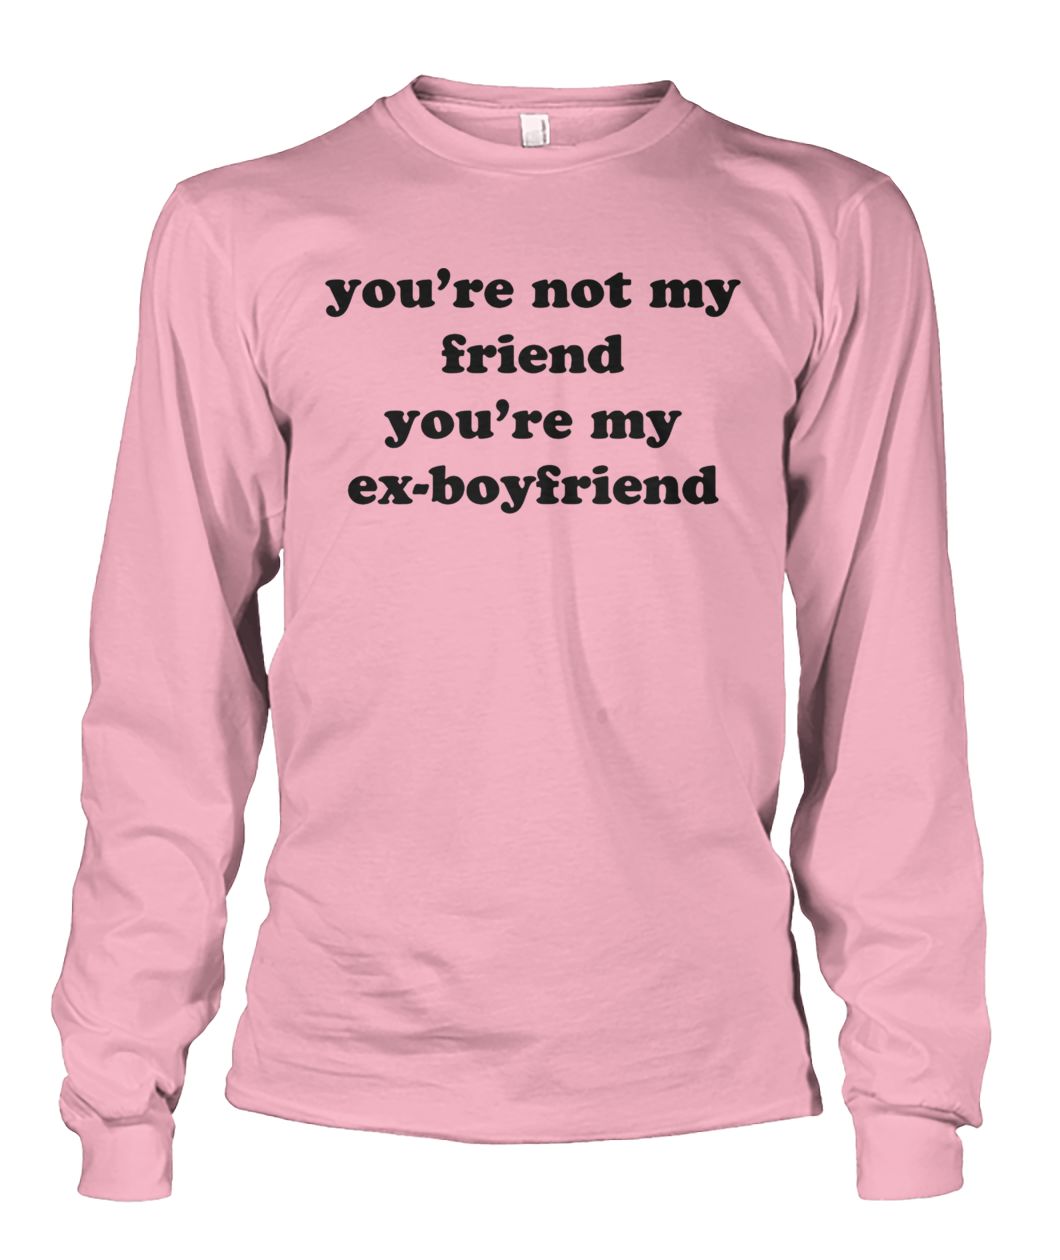 You're not my friend you're my ex-boyfriend unisex long sleeve